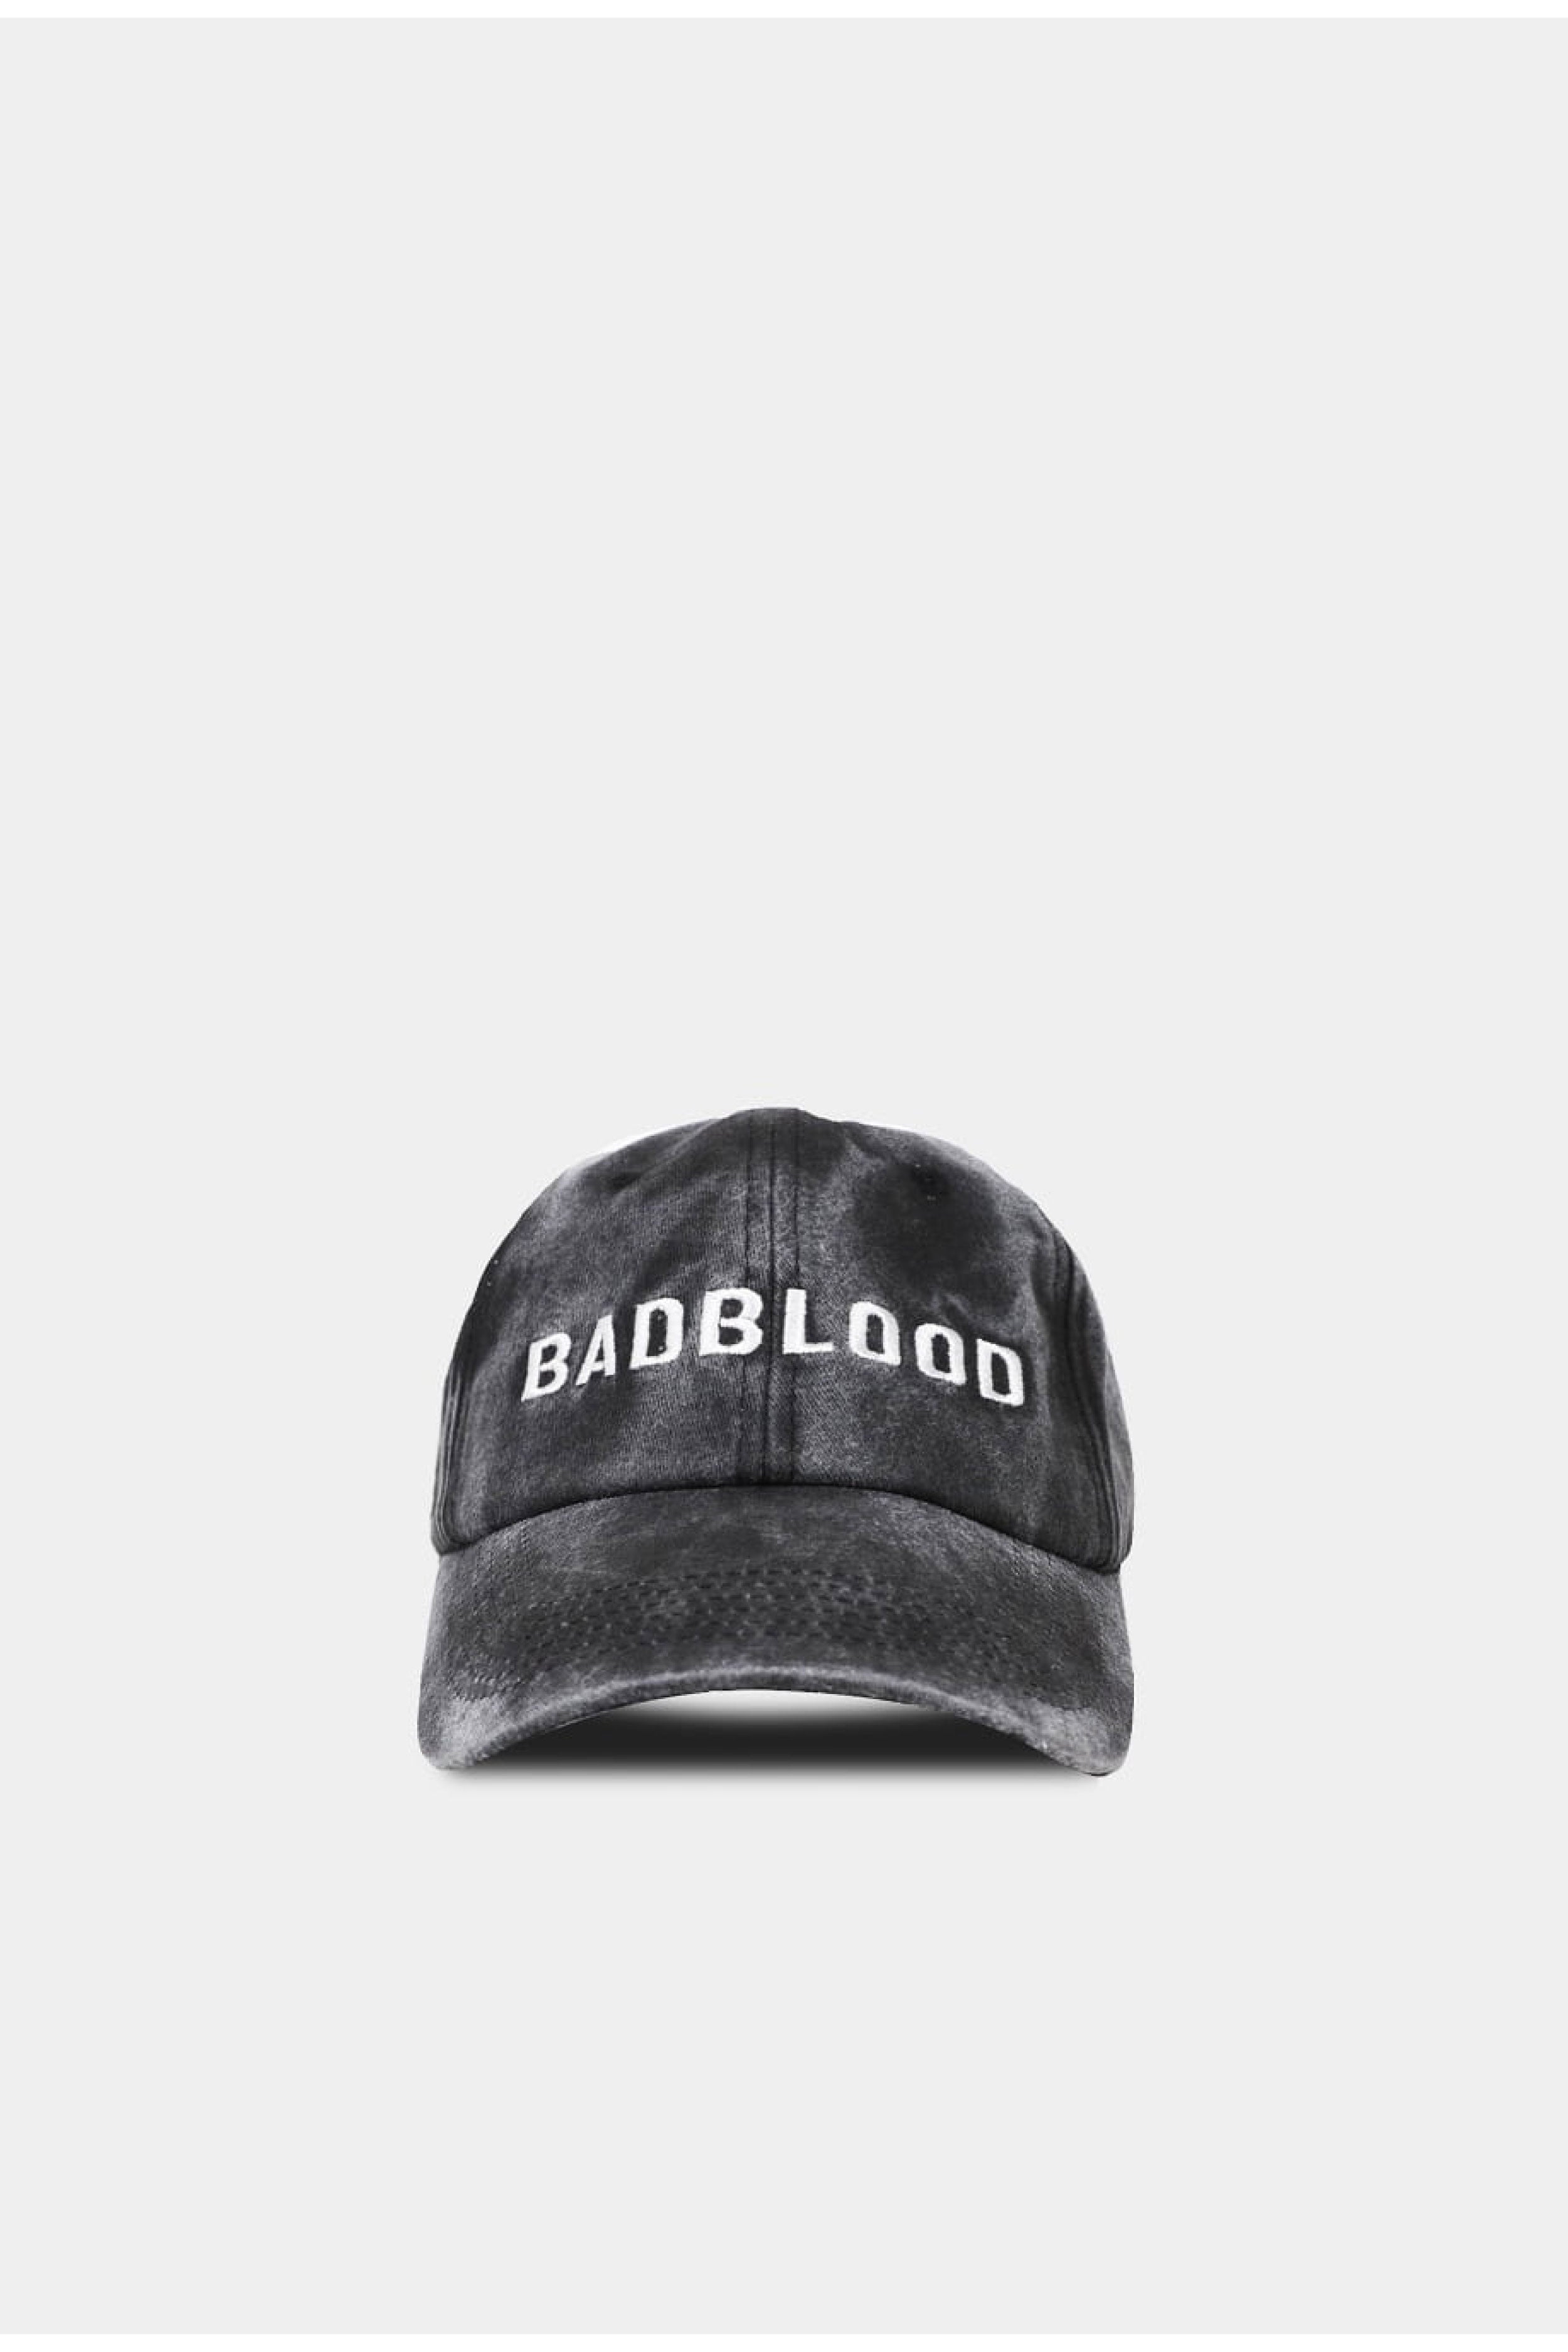 Badblood Vintage Logo Ball Cap Charcoal